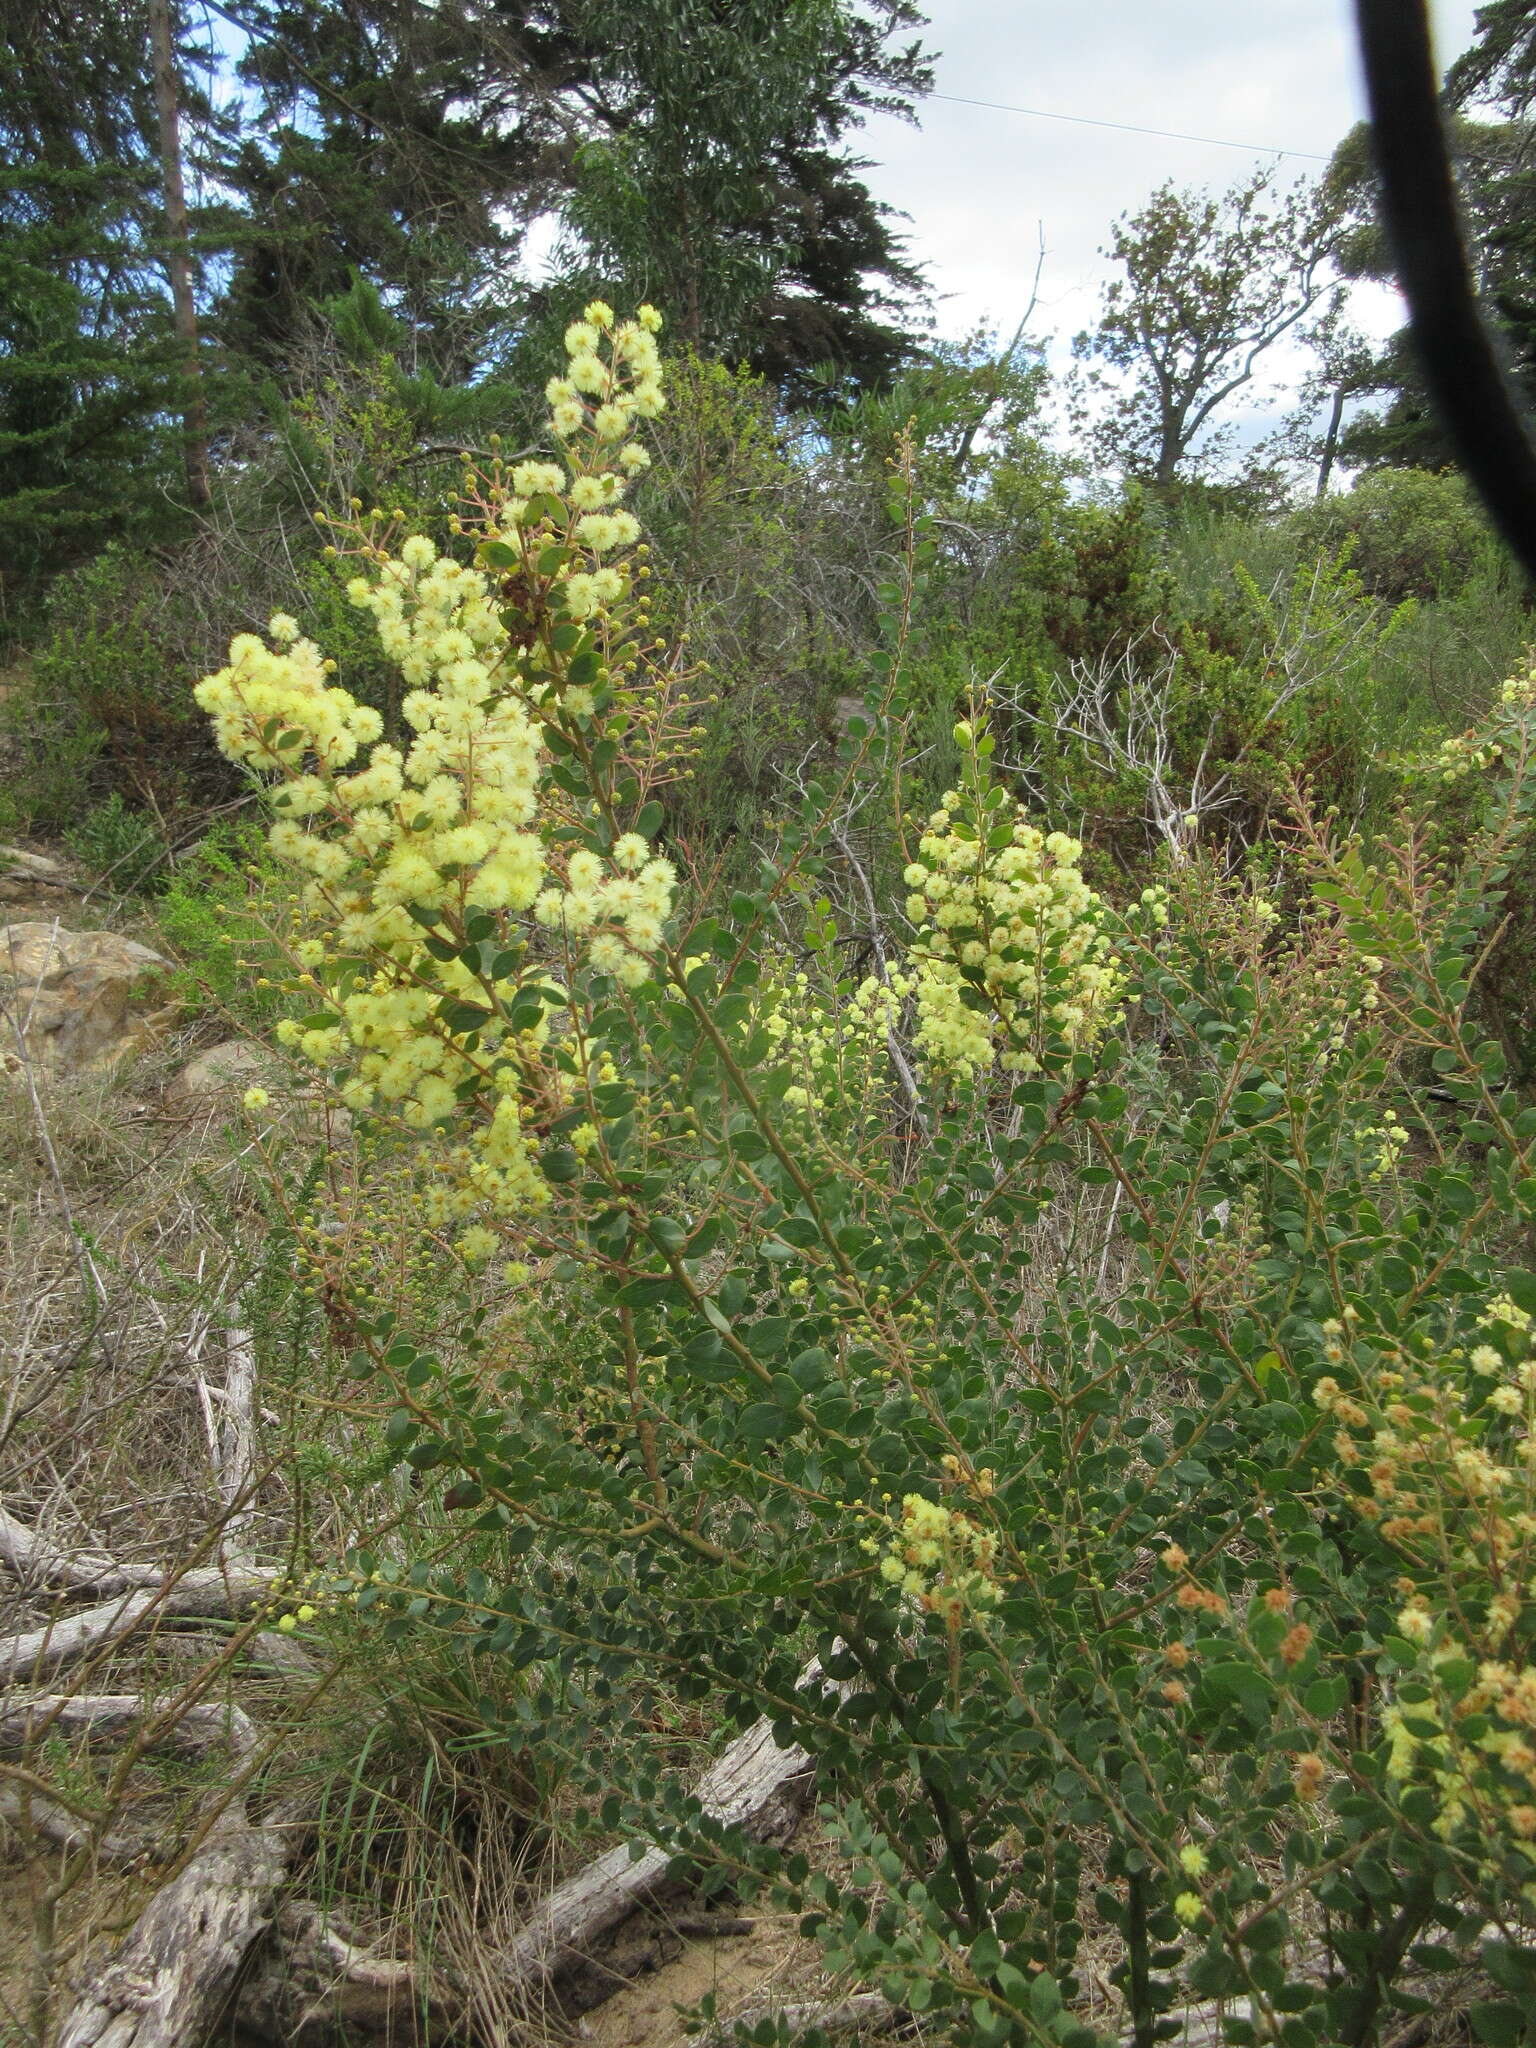 Image of Acacia piligera A. Cunn.